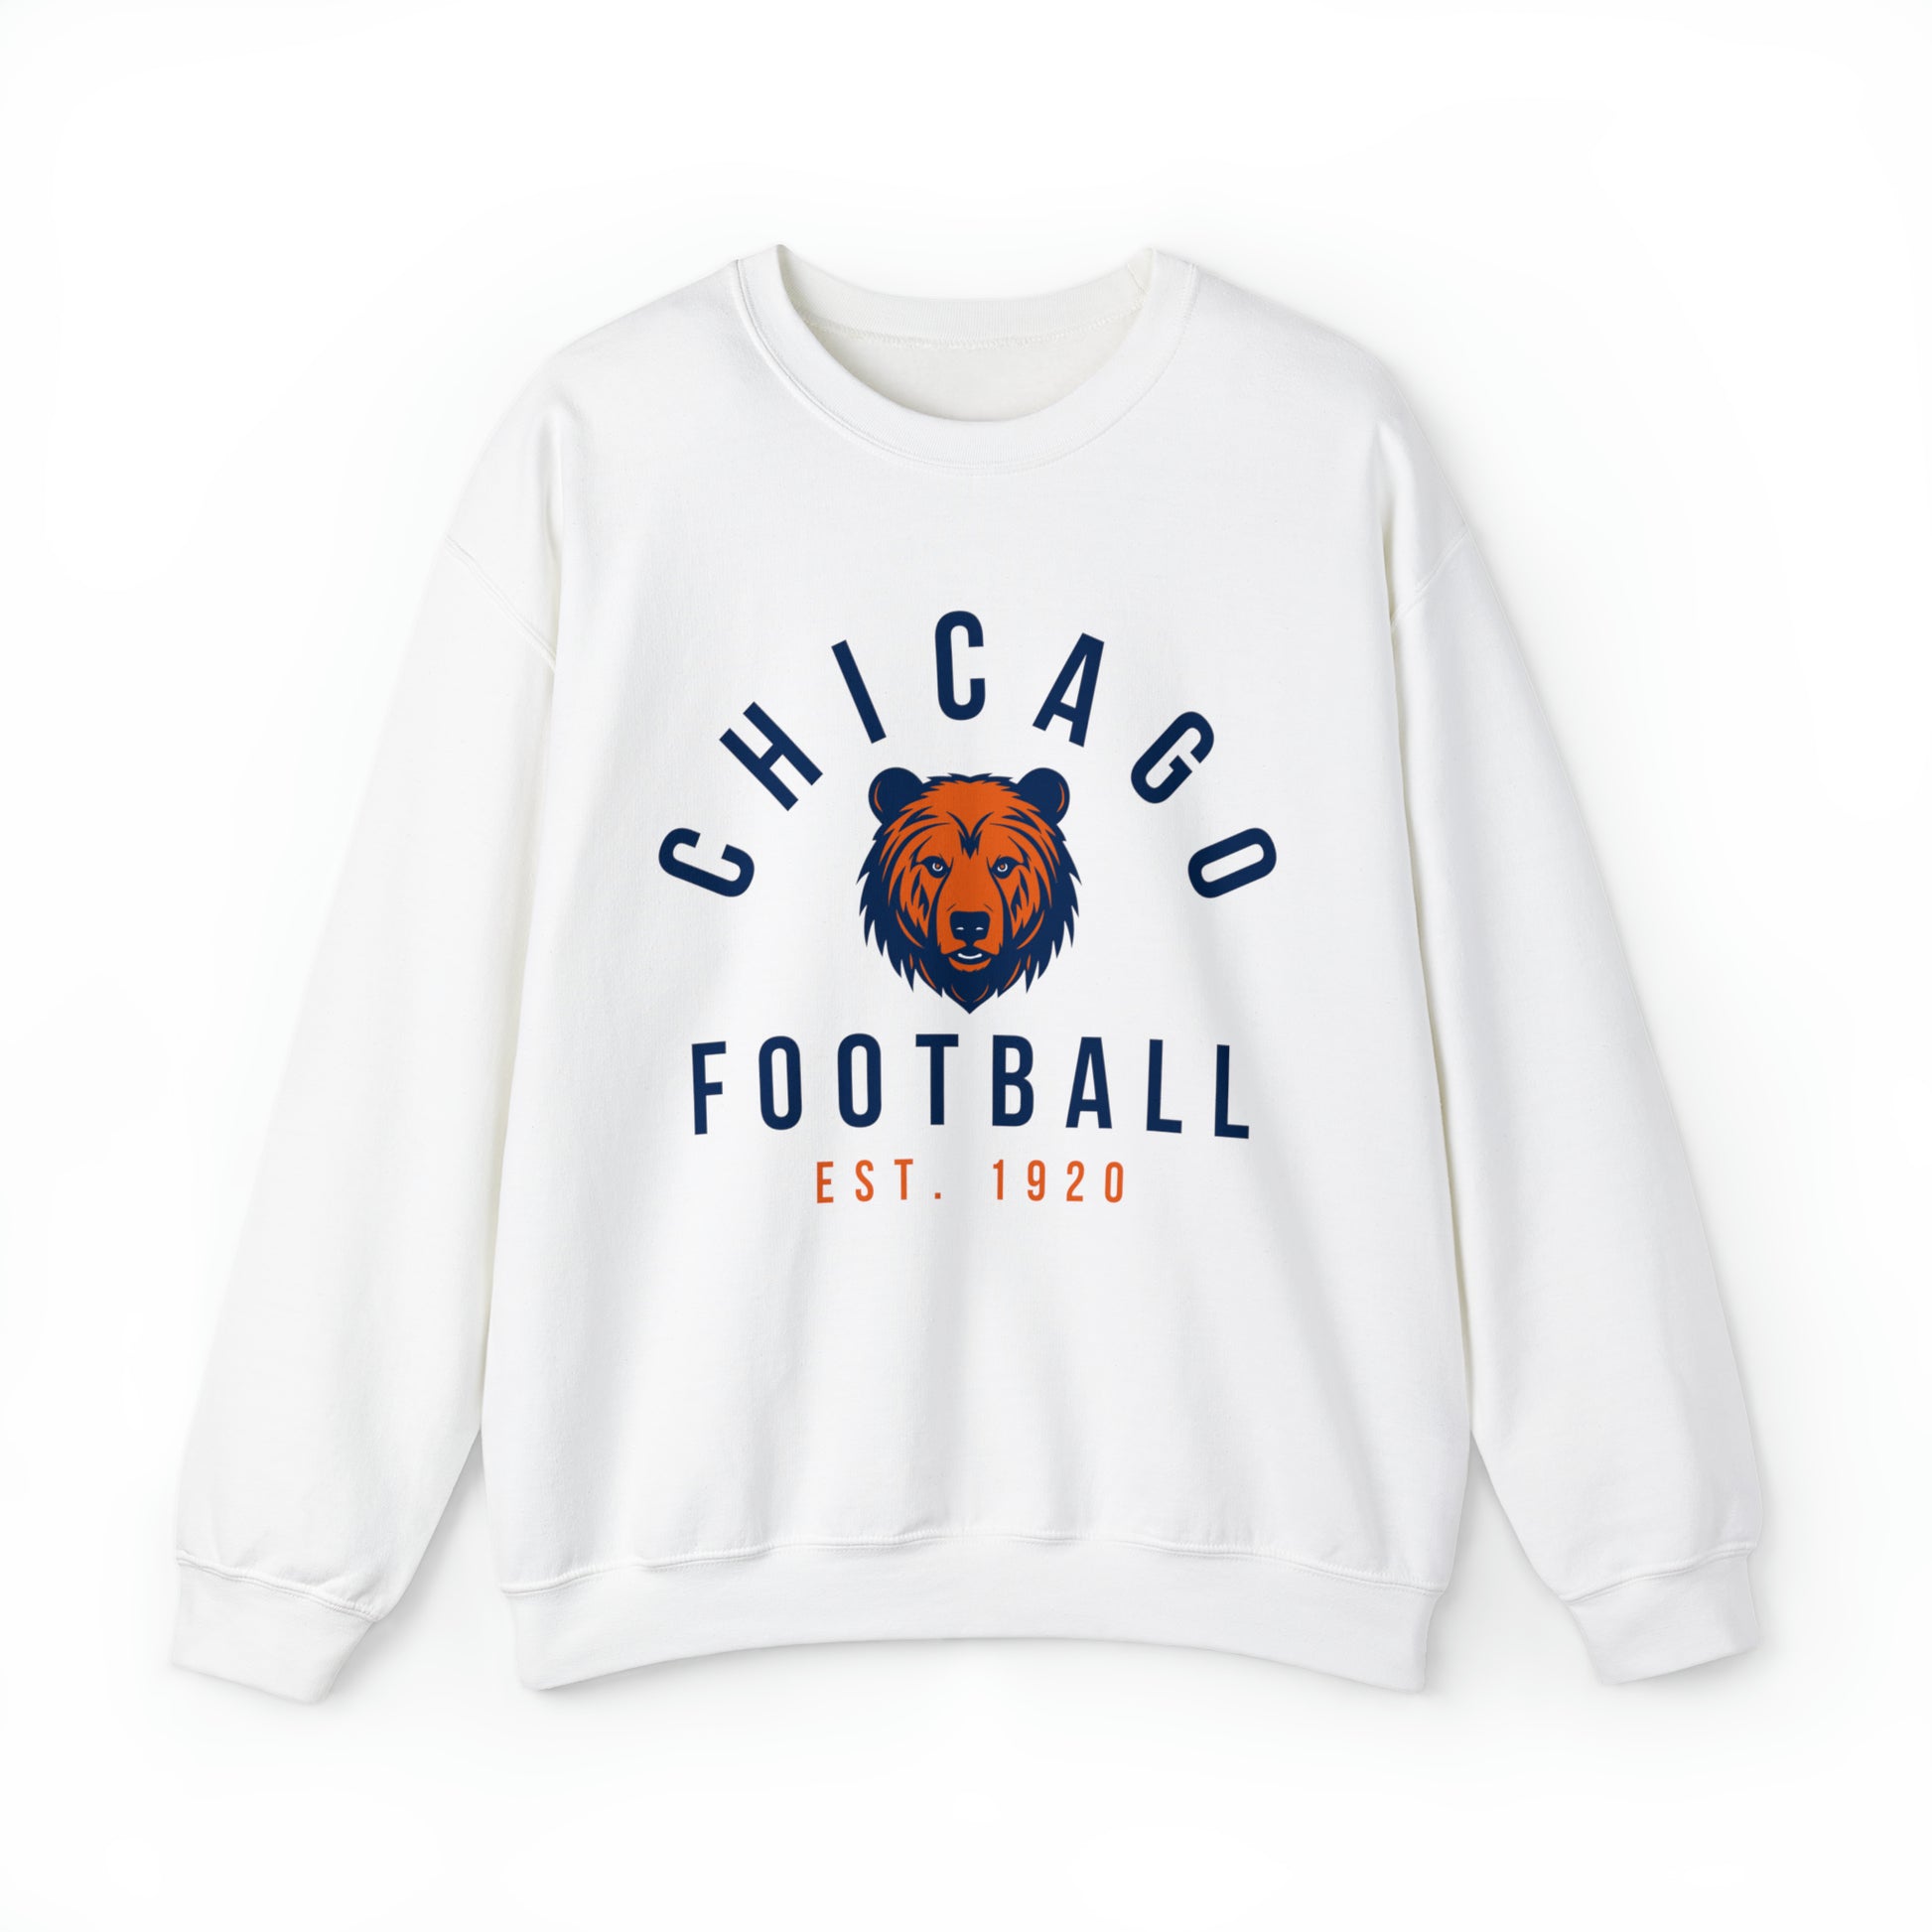 White Chicago Bears Crewneck Sweatshirt - Vintage Football - Retro Style Football Apparel - Design 4